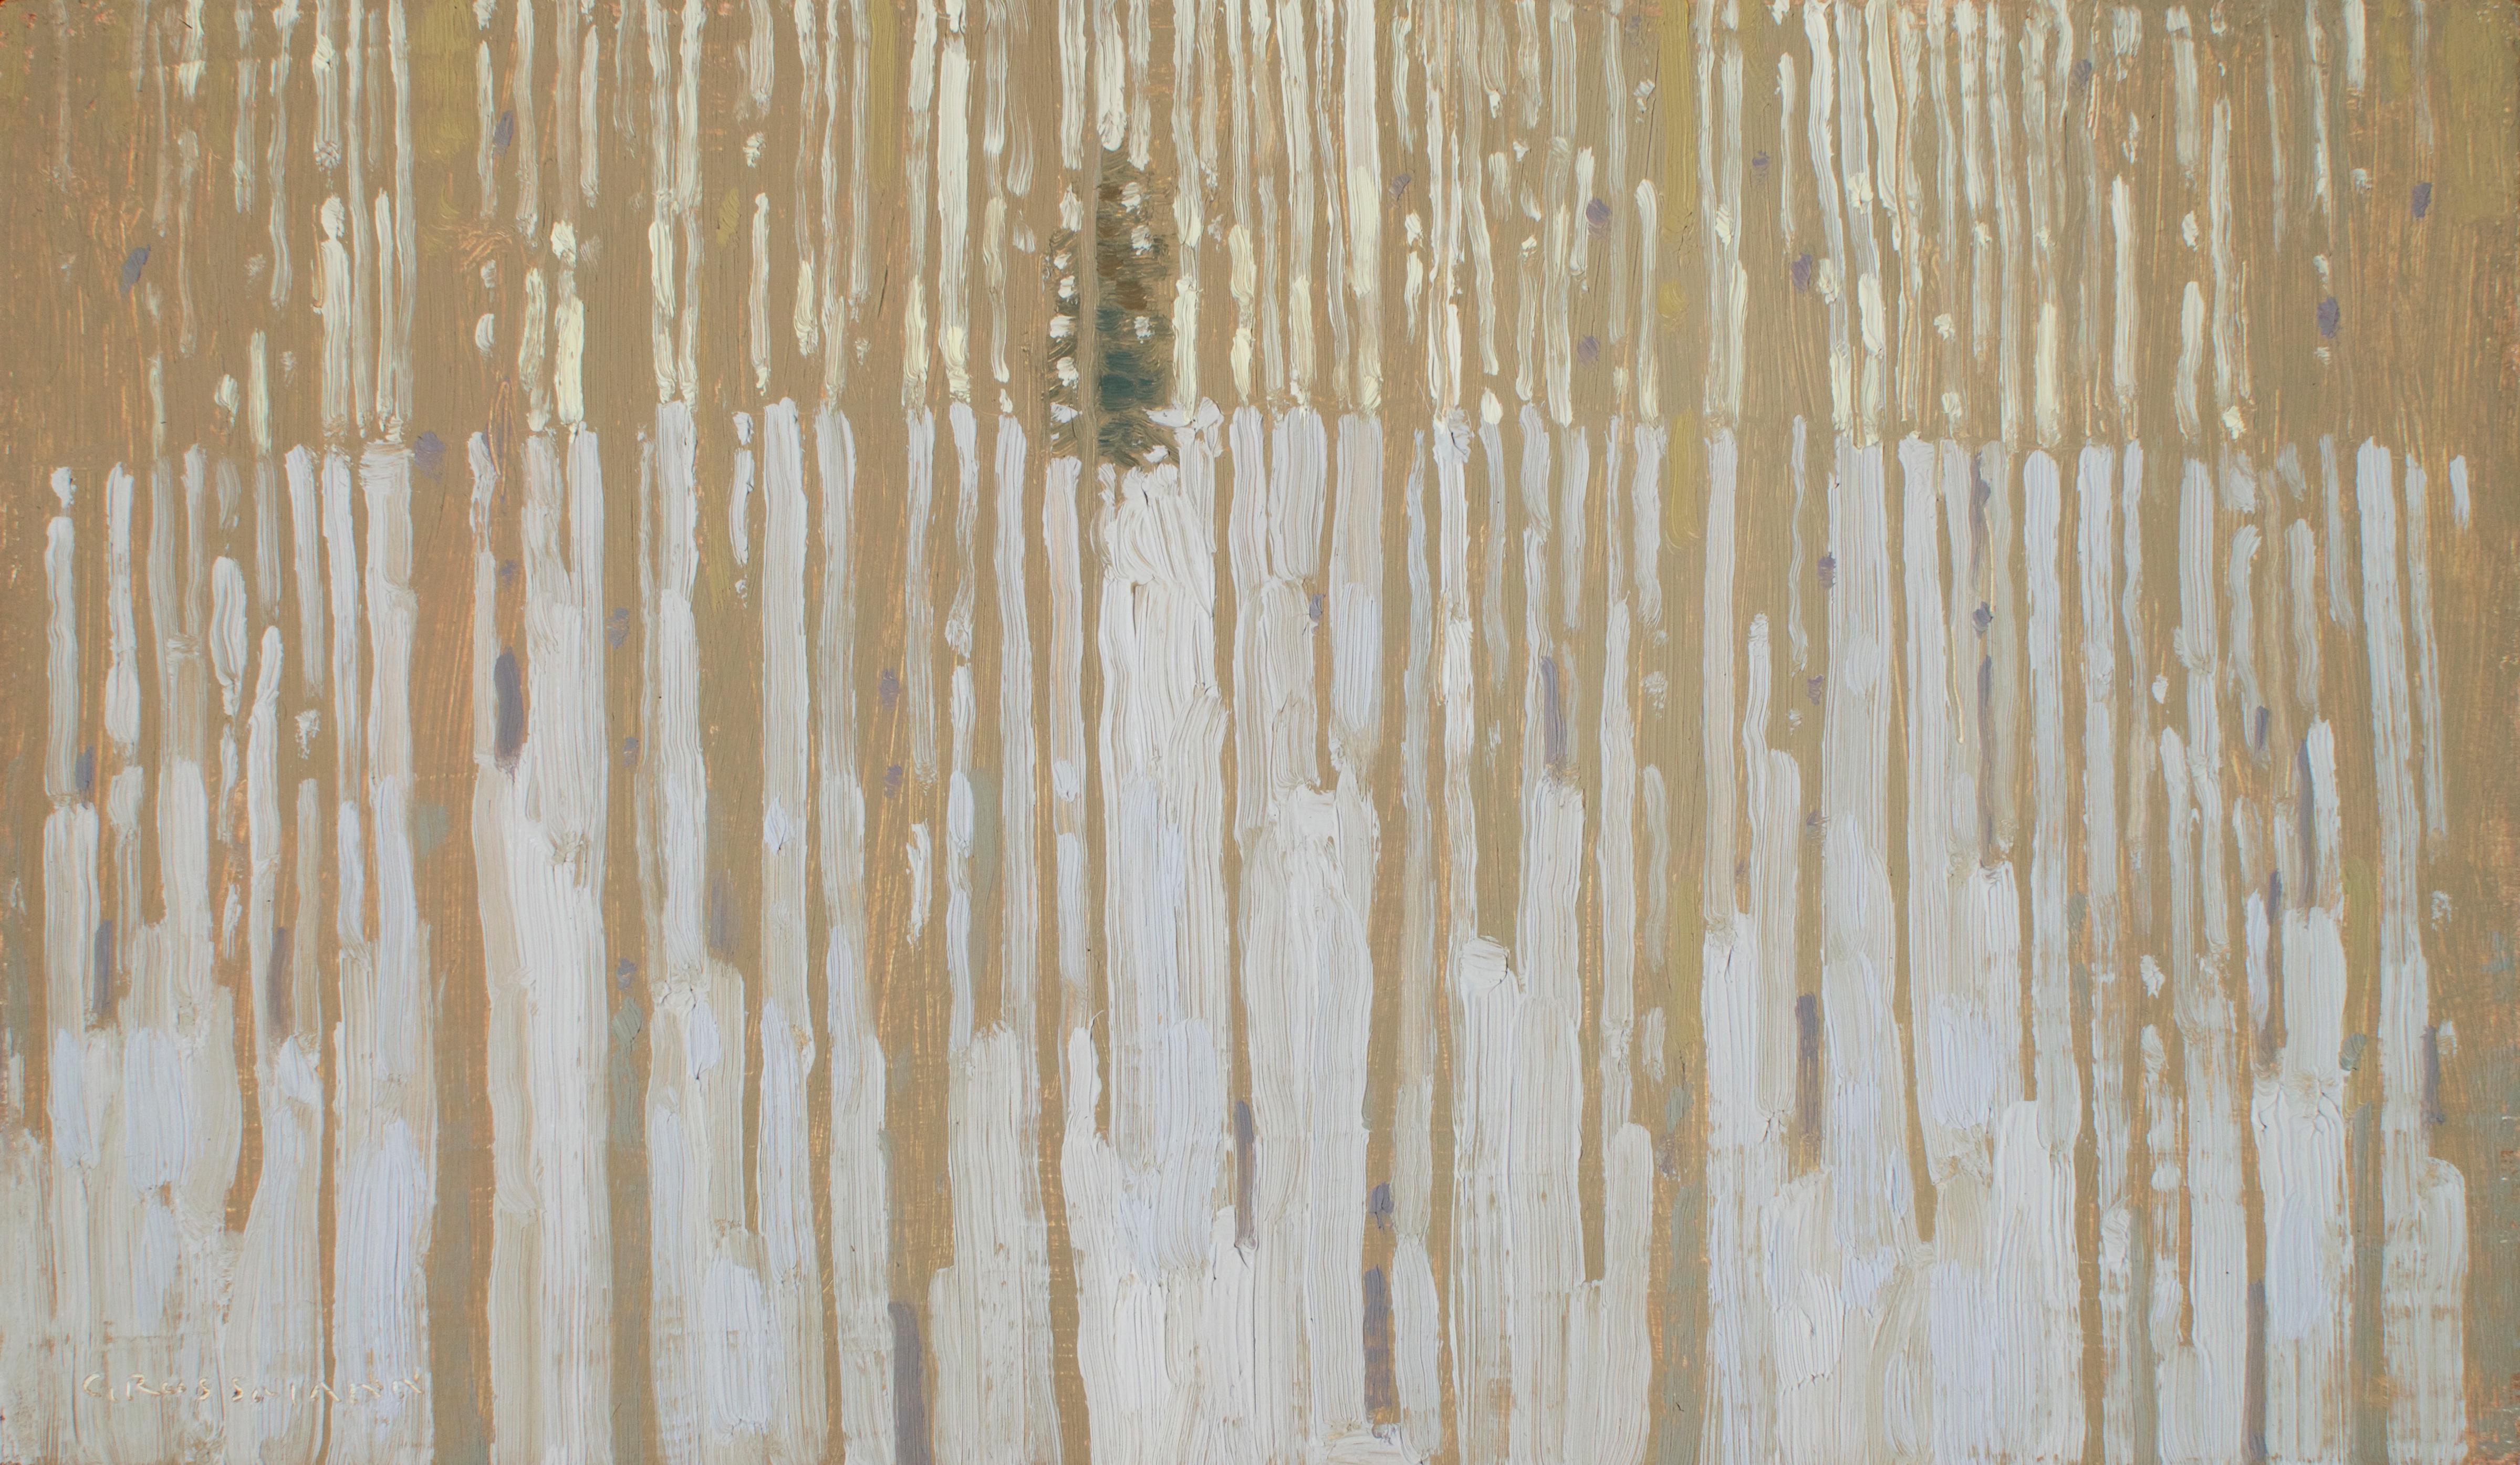 David Grossmann Landscape Painting - Solitary Pine